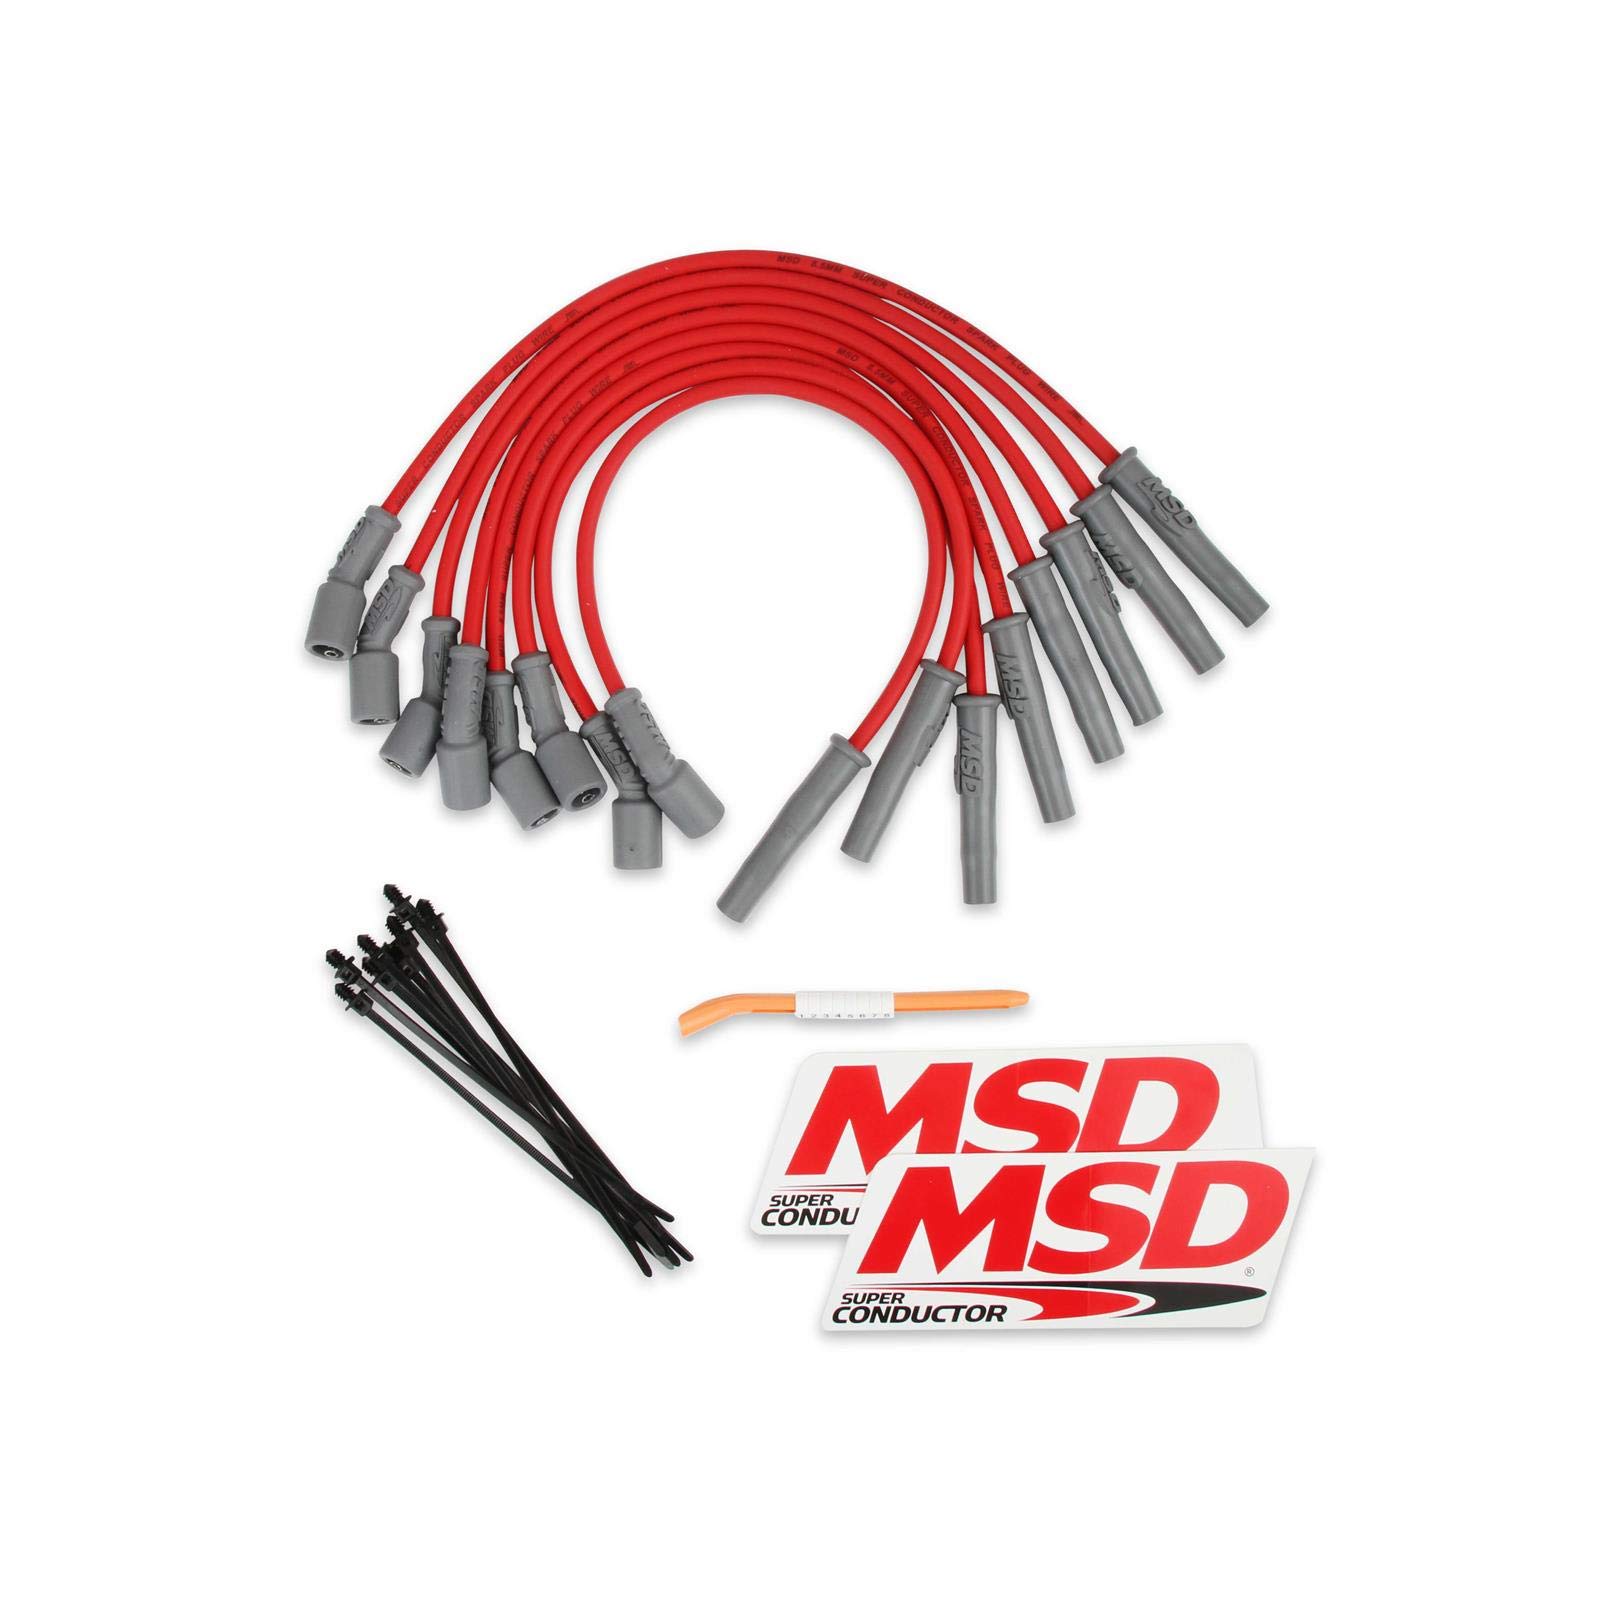 MSD 31639 Draht-Set, rot, Ford Raptor 2010-14 6.2L von MSD